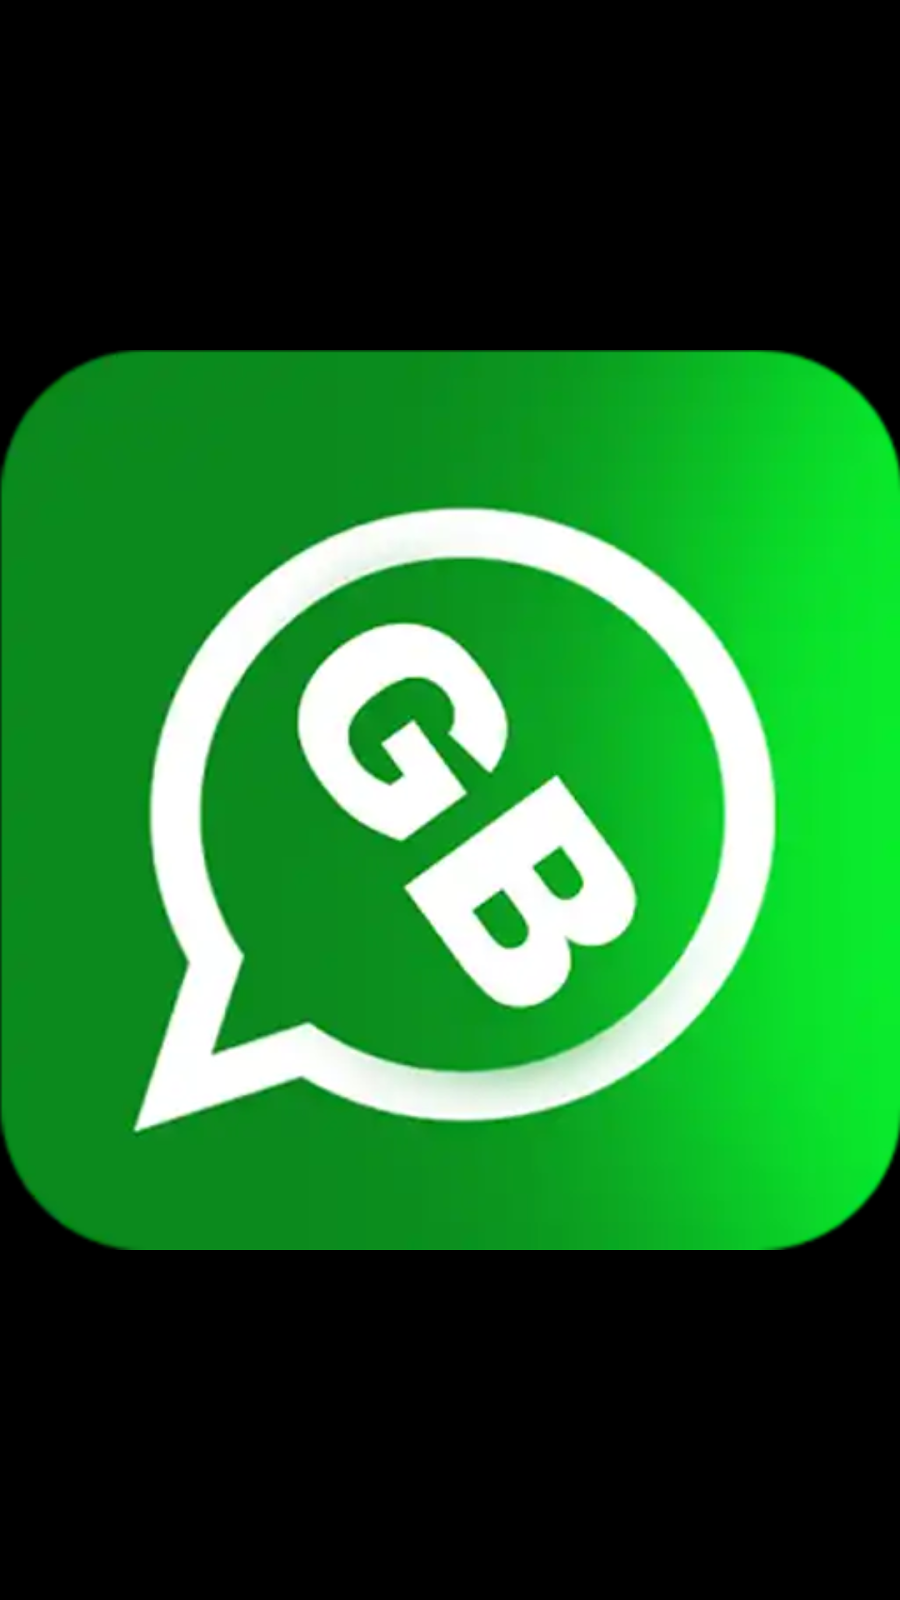 gb whatsapp download 2018